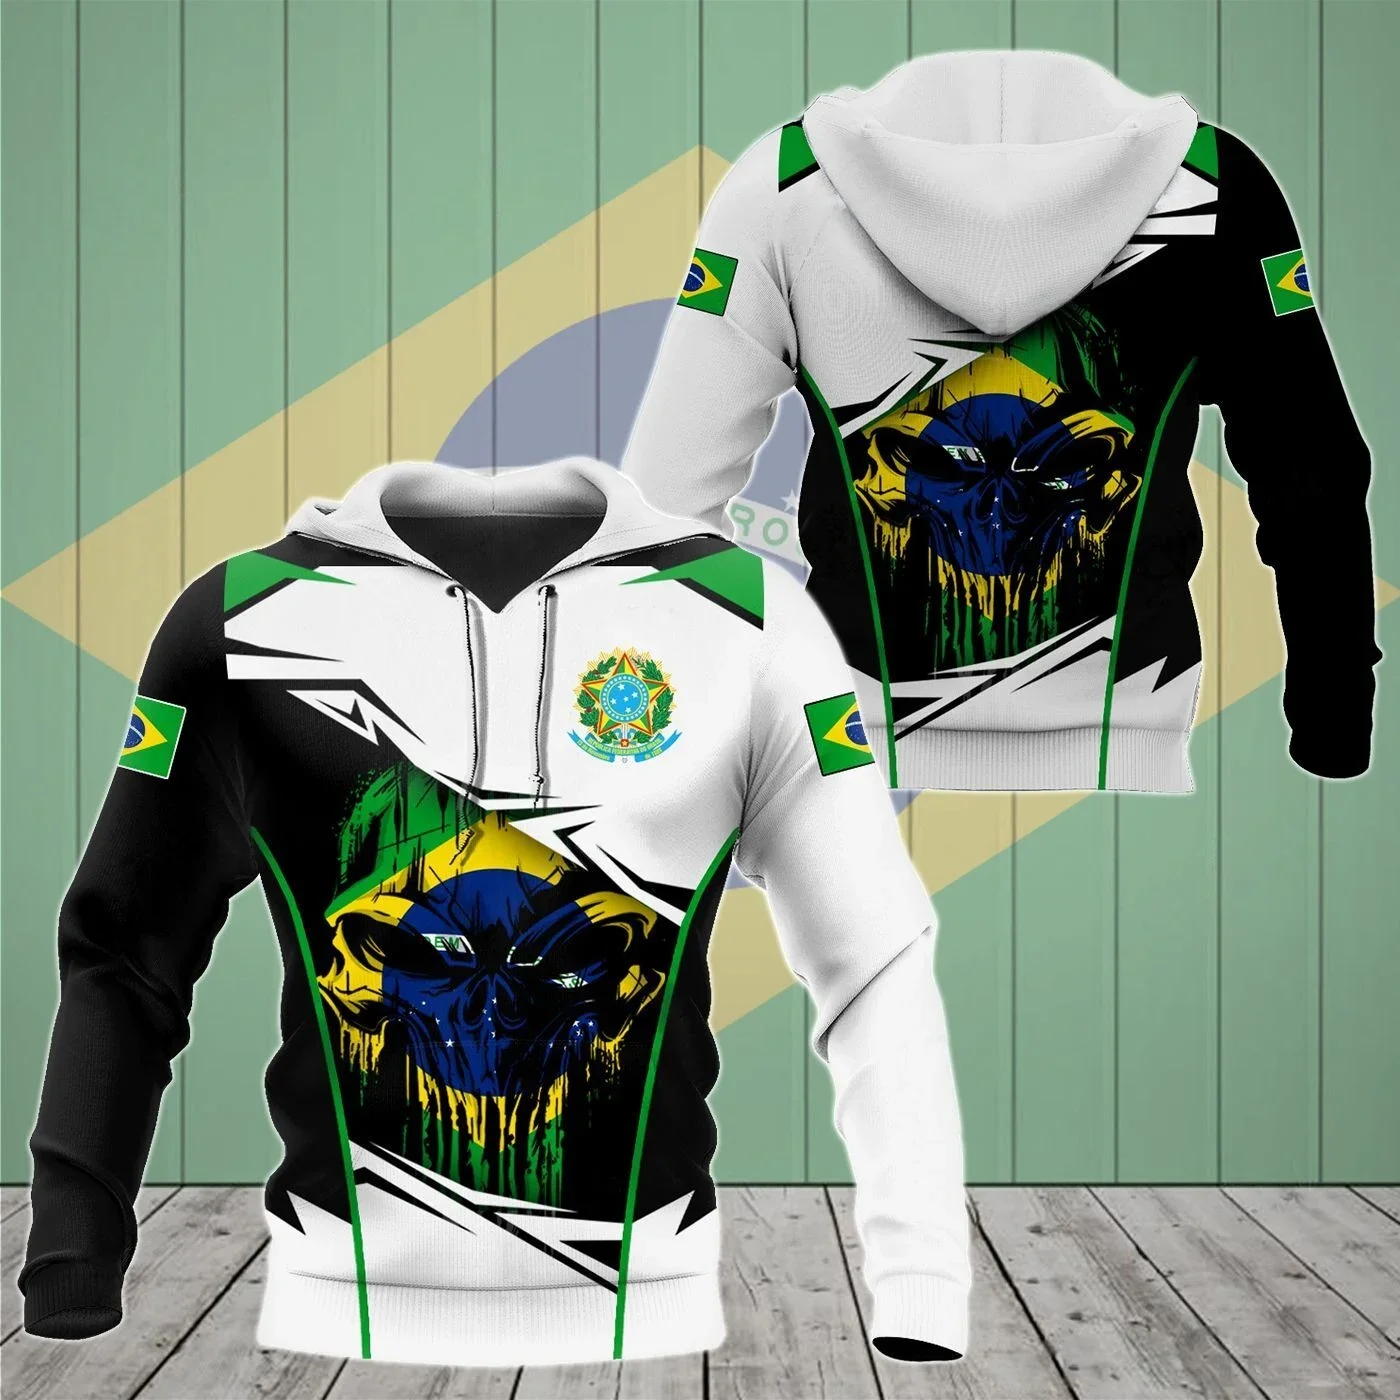 

BRAZIL Skull FLAG MAP Country 3D Print Zipper Hoodie Men Pullover Sweatshirt Hooded Jersey Tracksuits Outwear Coat